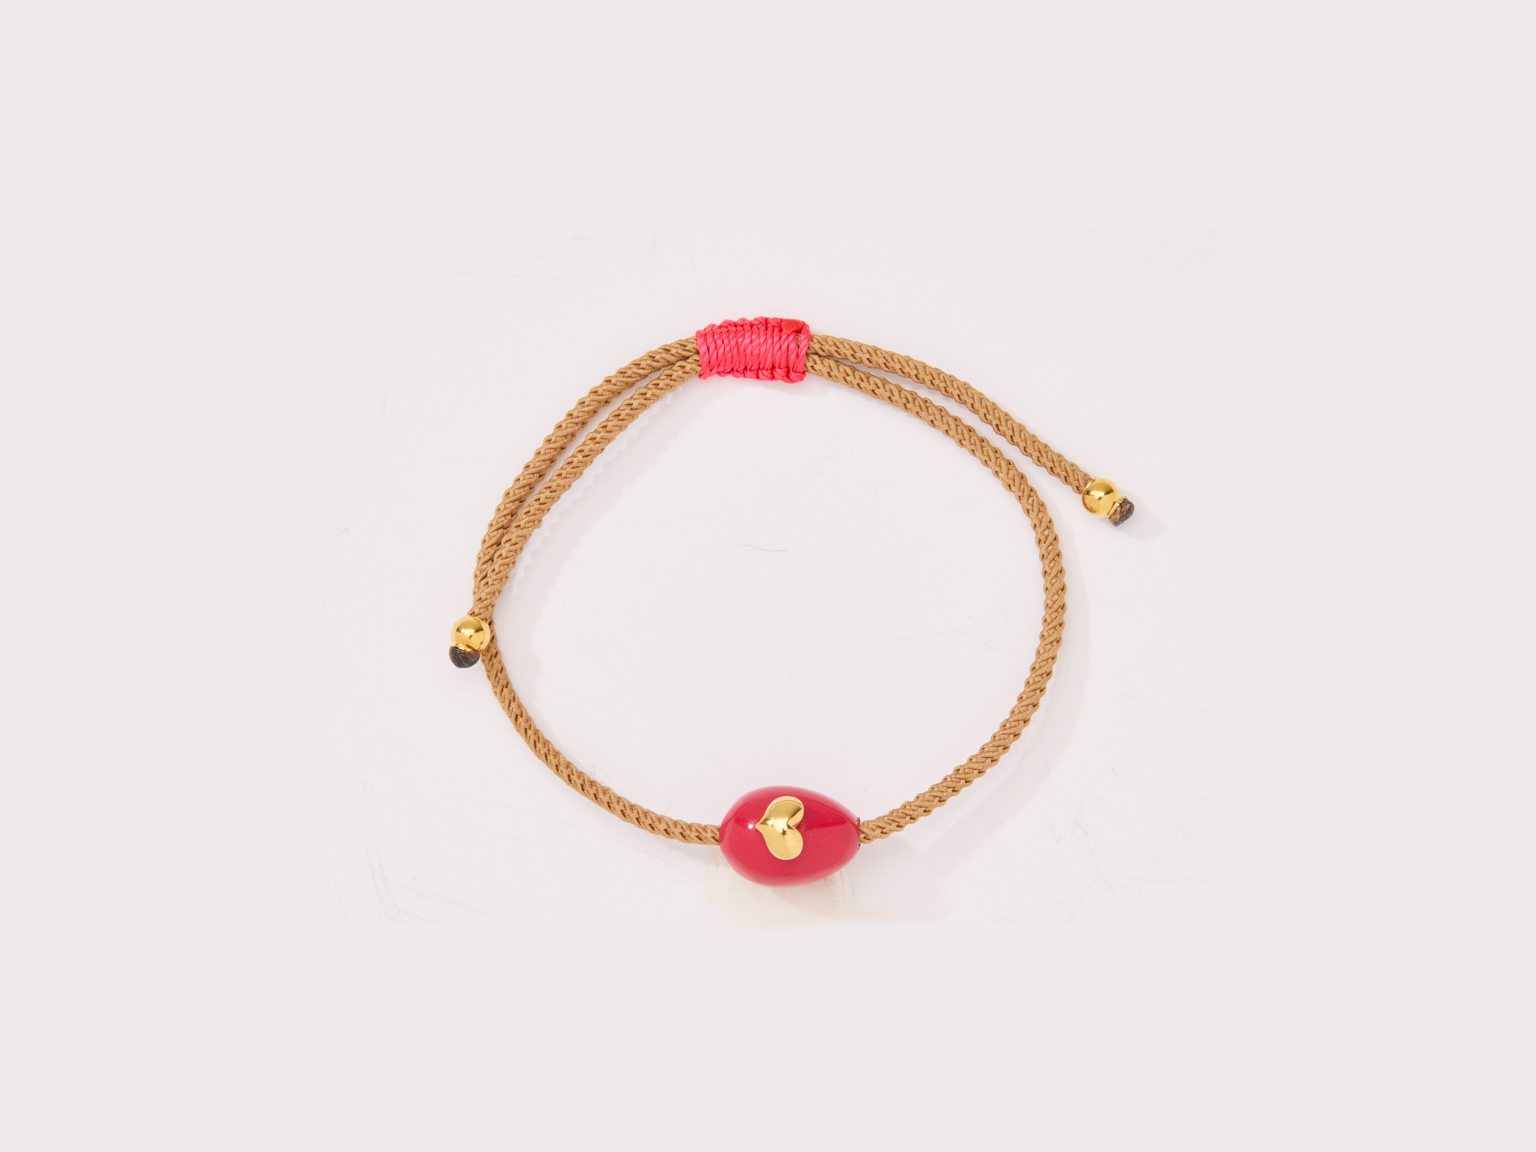 Bracelet with red egg "Heart"